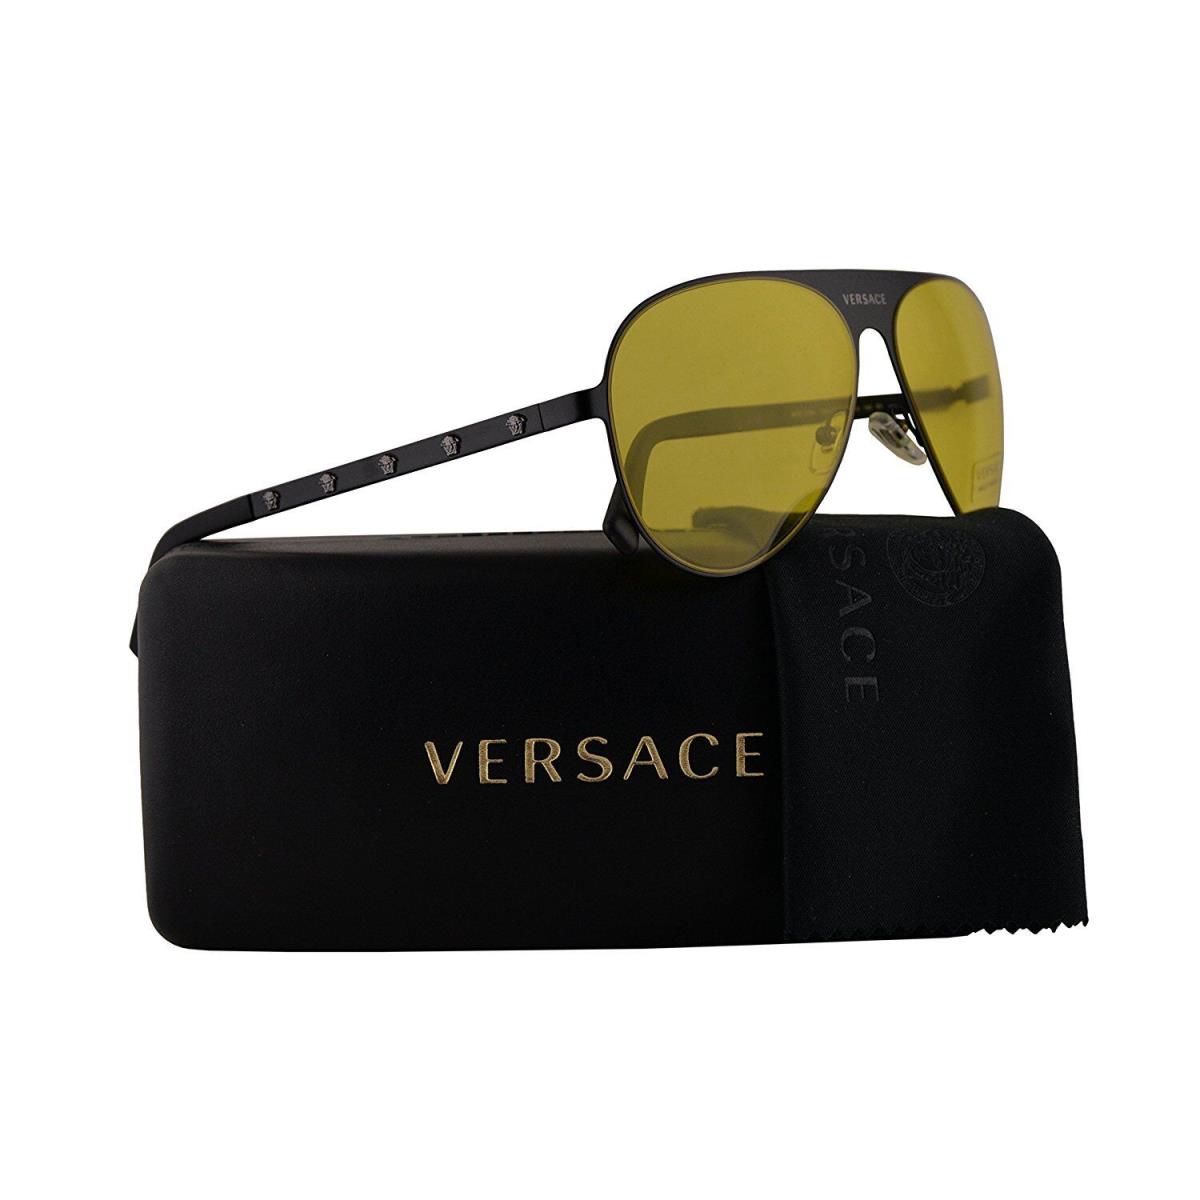 Versace Pilot Sunglasses VE2189 126185 59mm Black / Yellow Lens